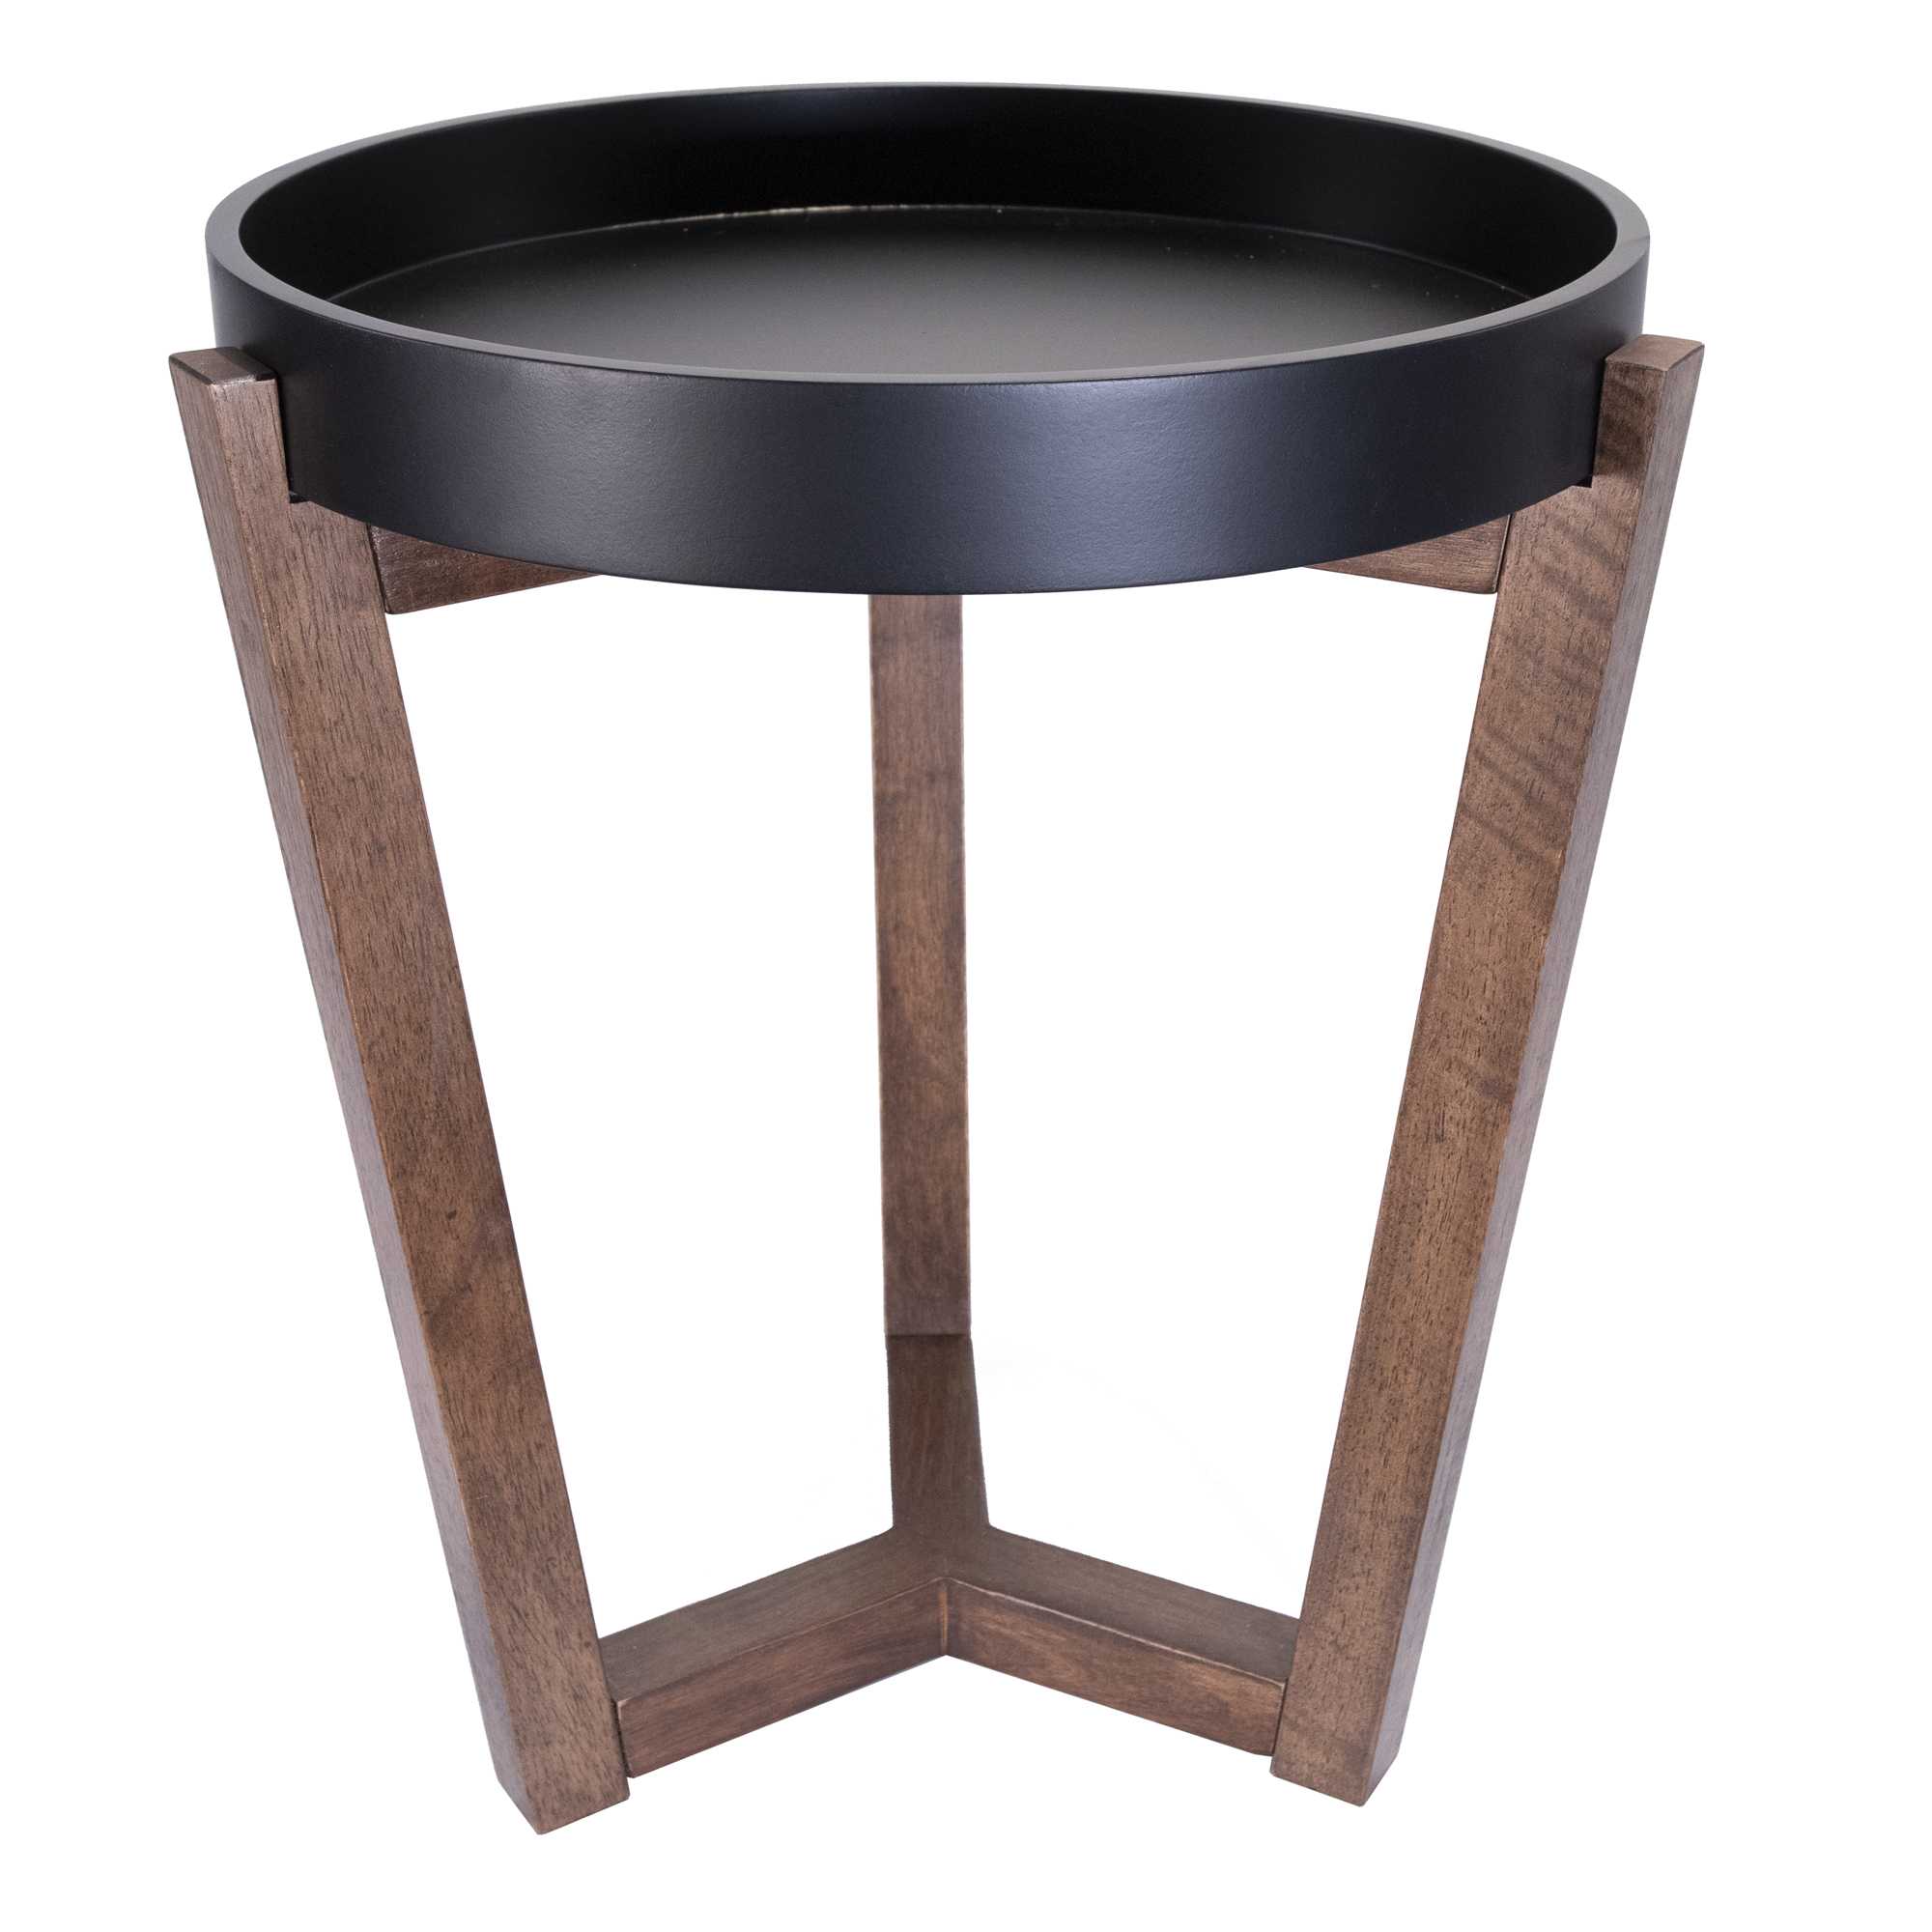 16" X 16" X 20" Black & Mocha Solid Wood Round Table